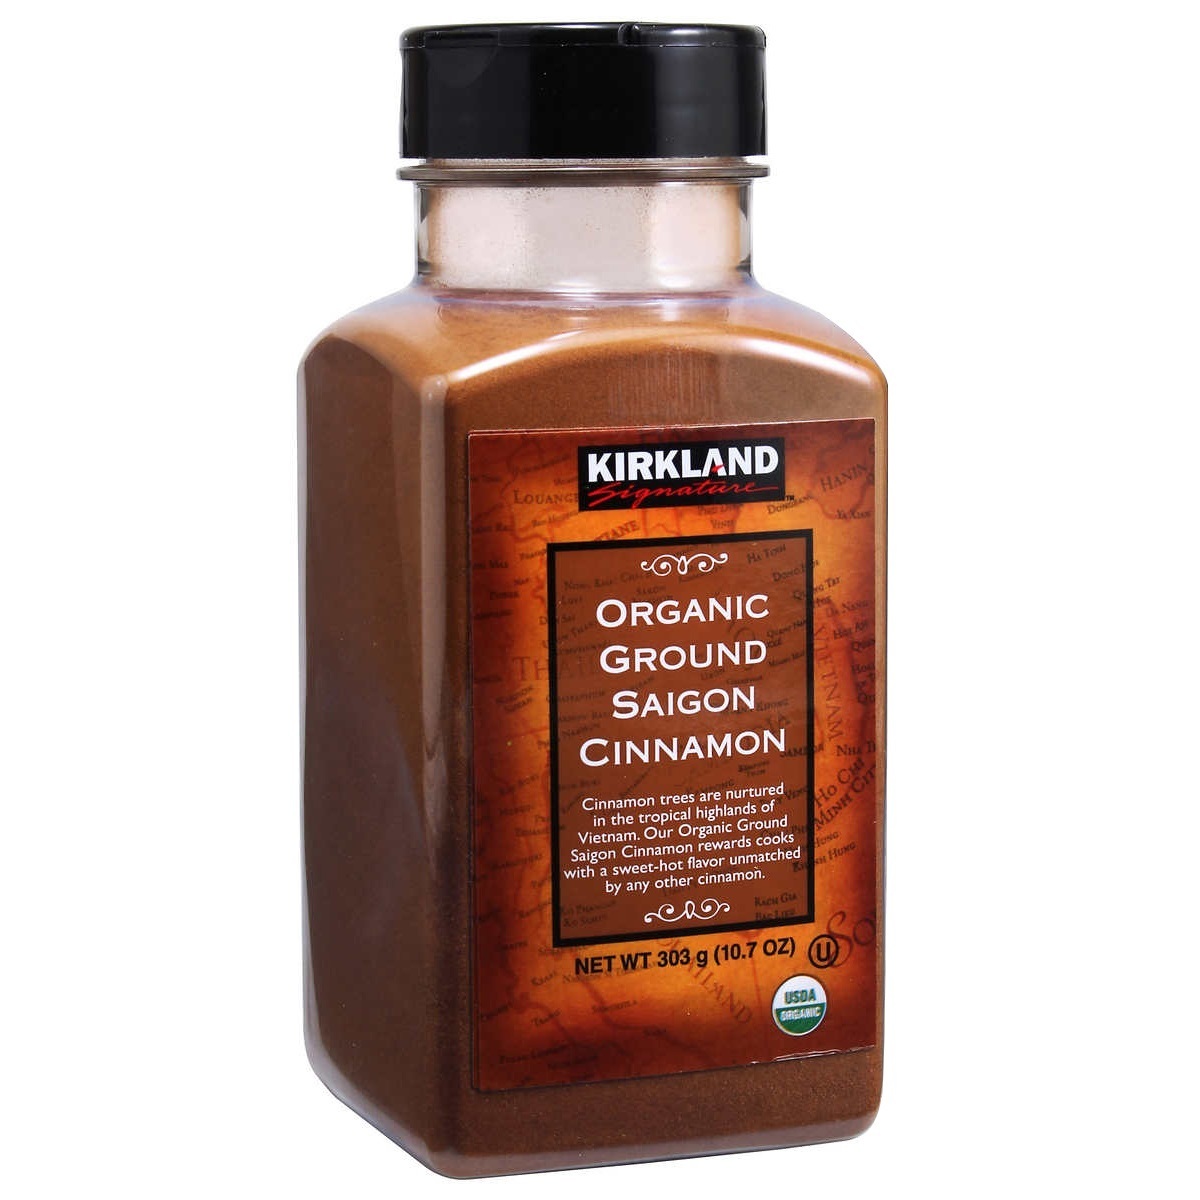 Kirkland Organic Ground Saigon Cinnamon 303g - pronatural